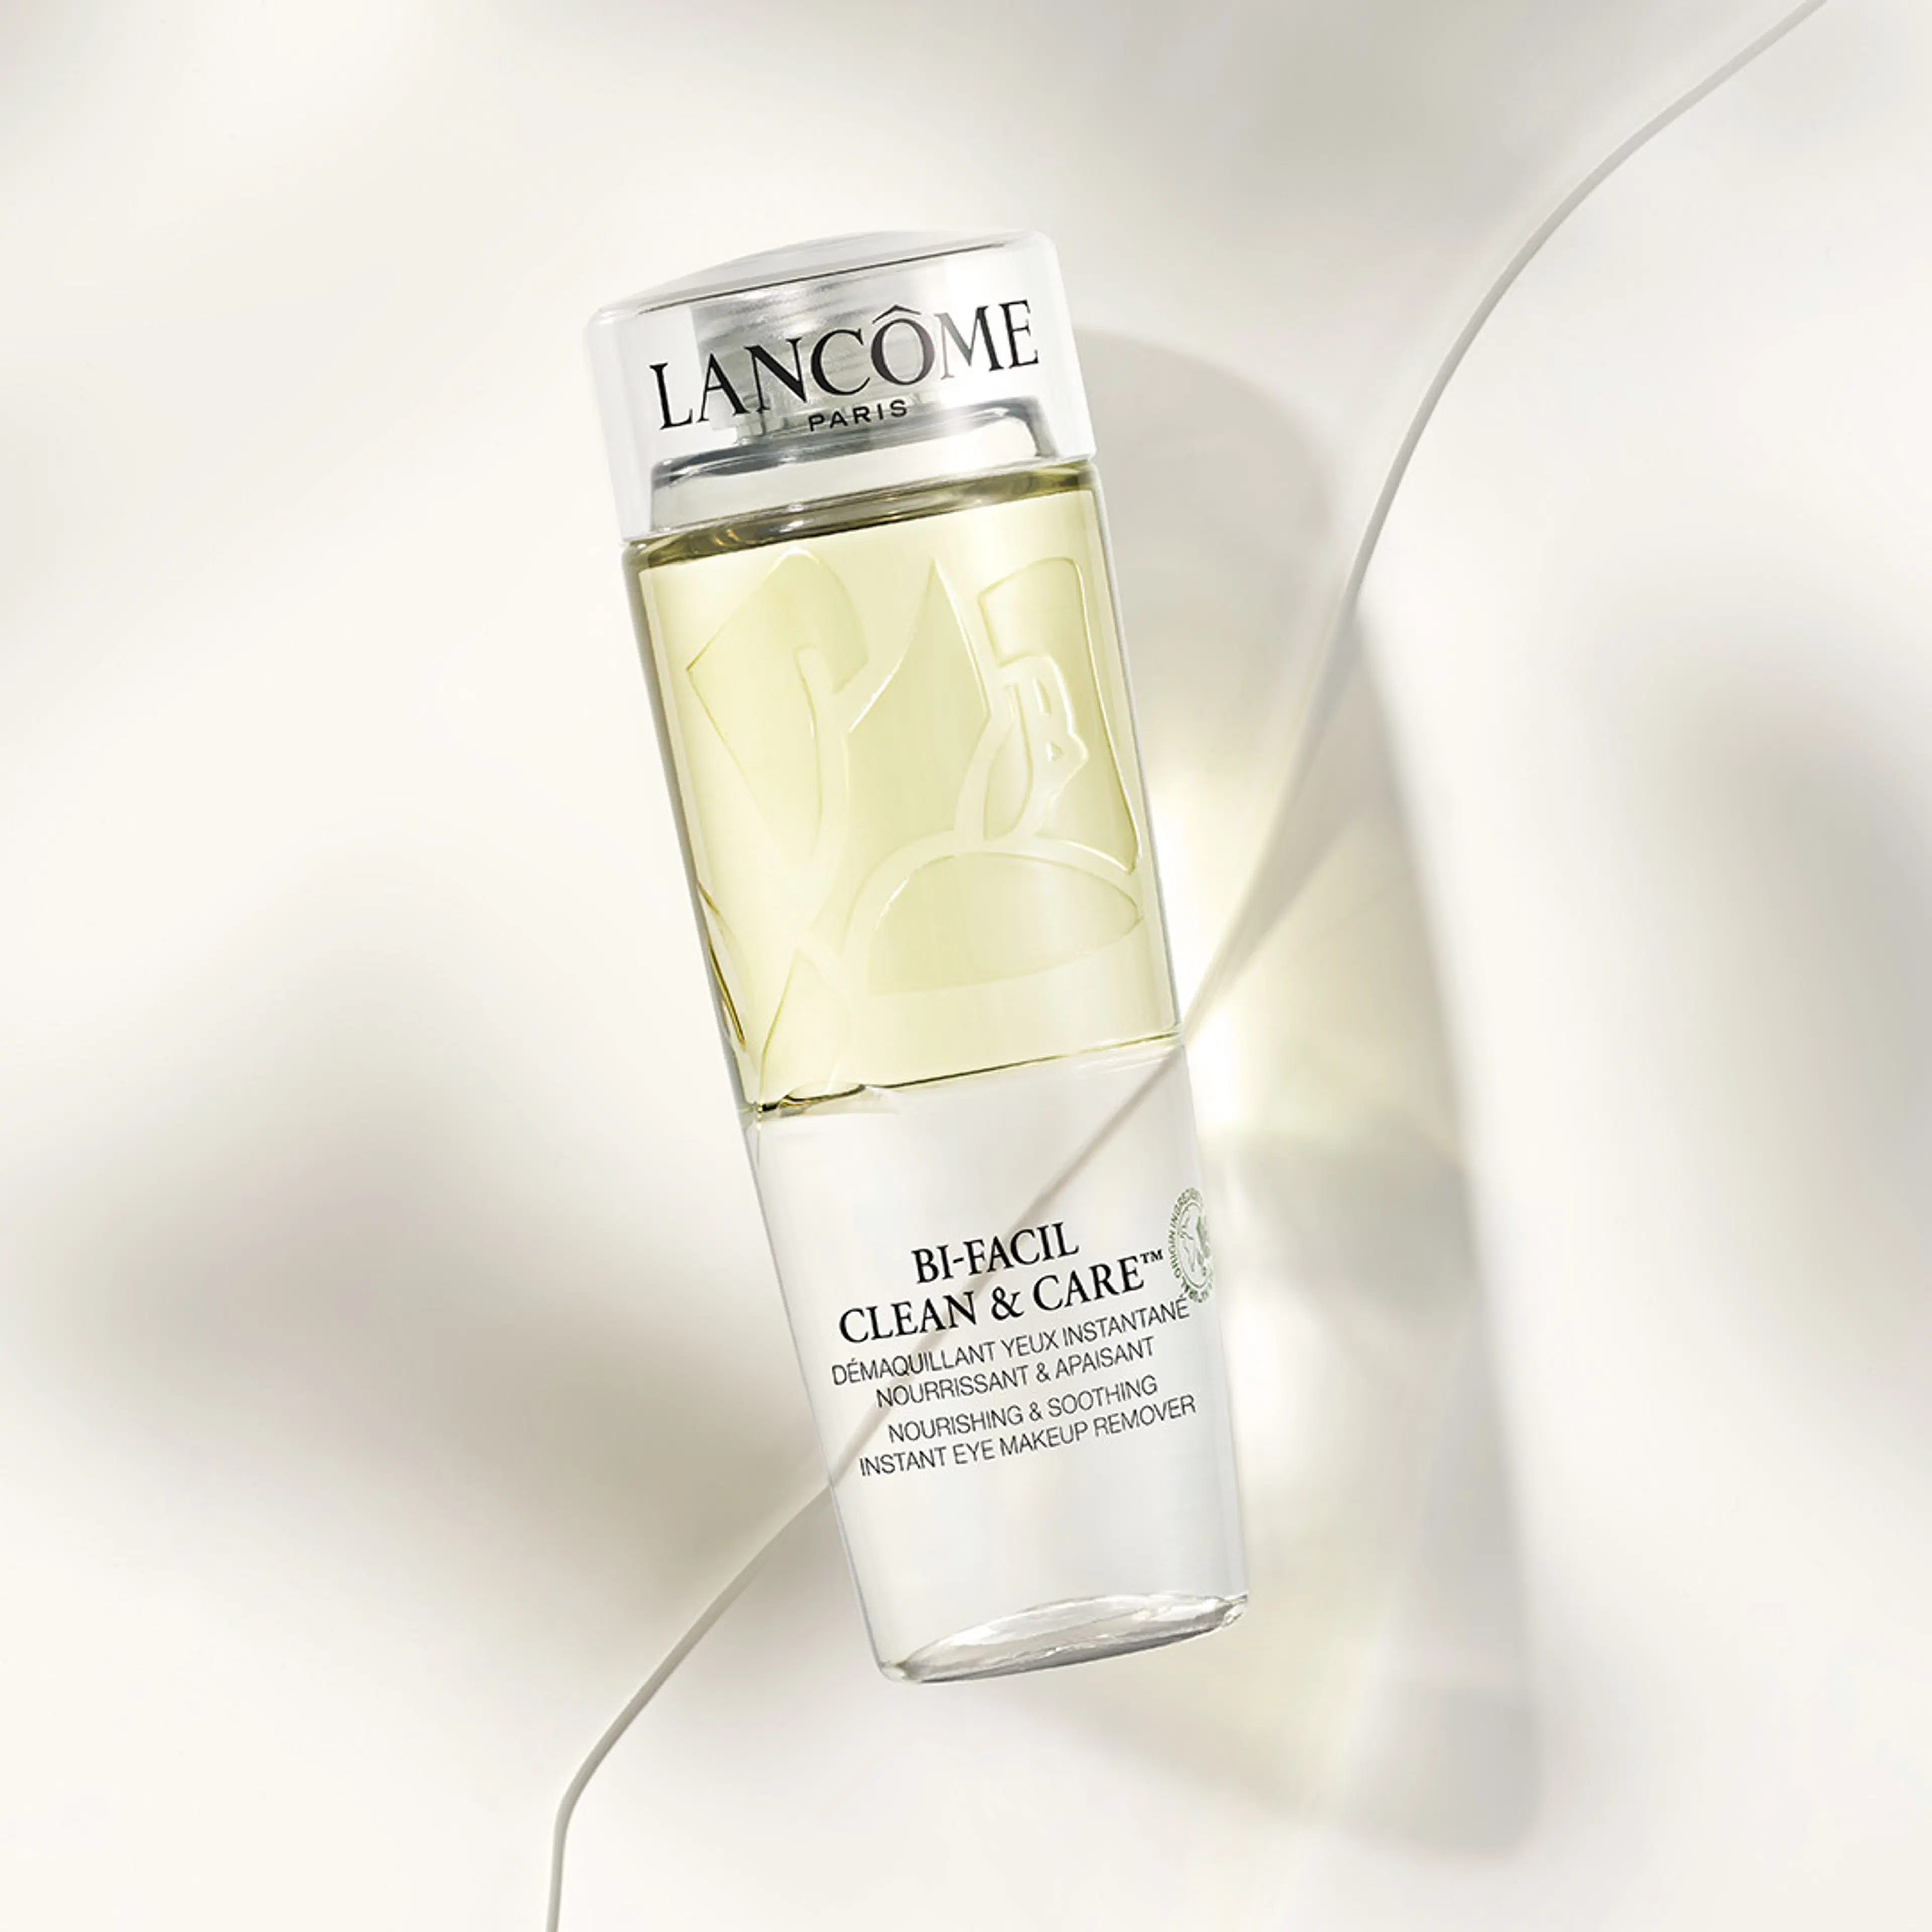 Lancôme Bi-Facil Clean and Care Makeup Remover silmämeikinpoistoaine 125 ml